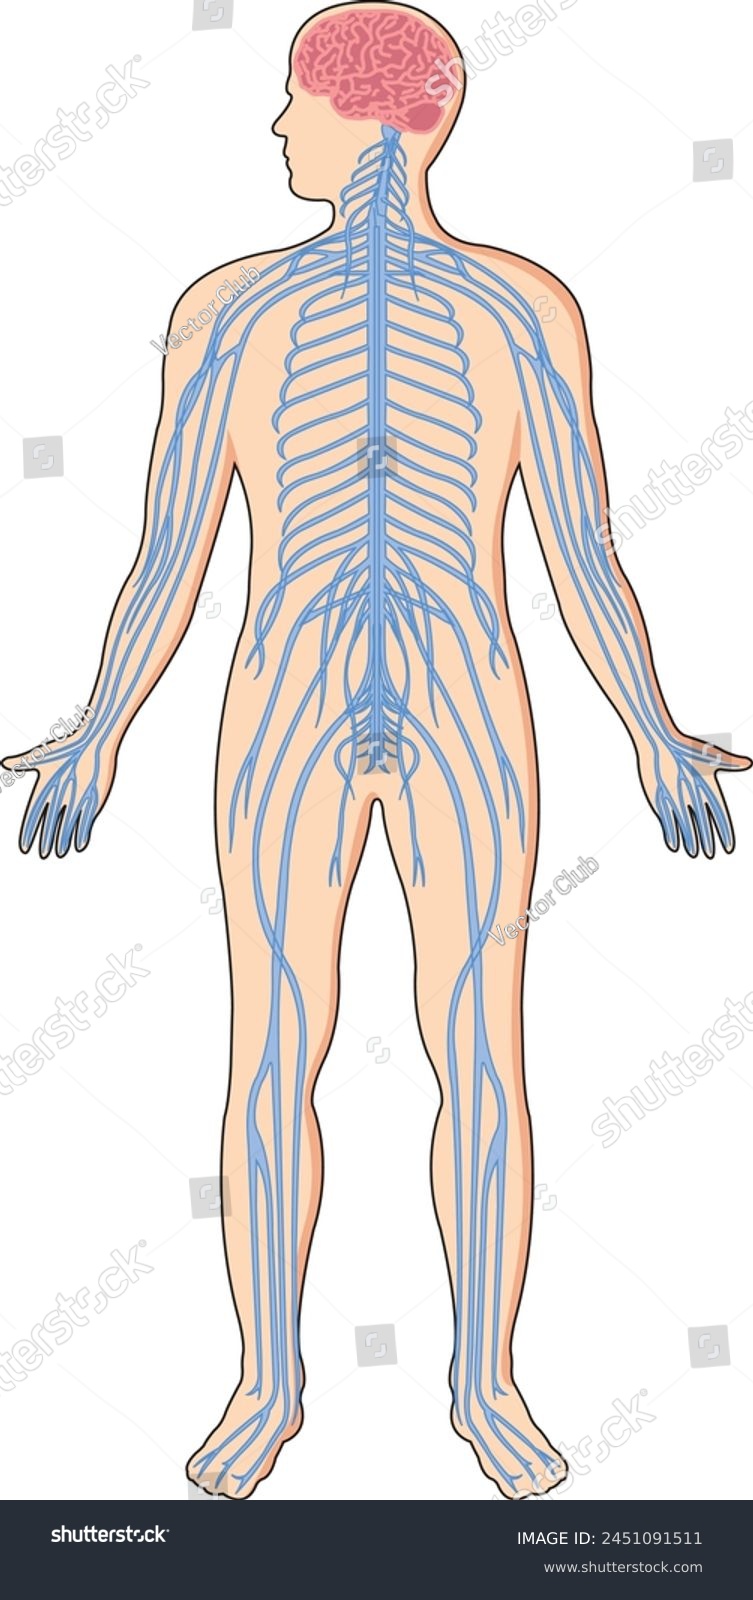 SVG of Illustration showing central nervous system in a human body svg